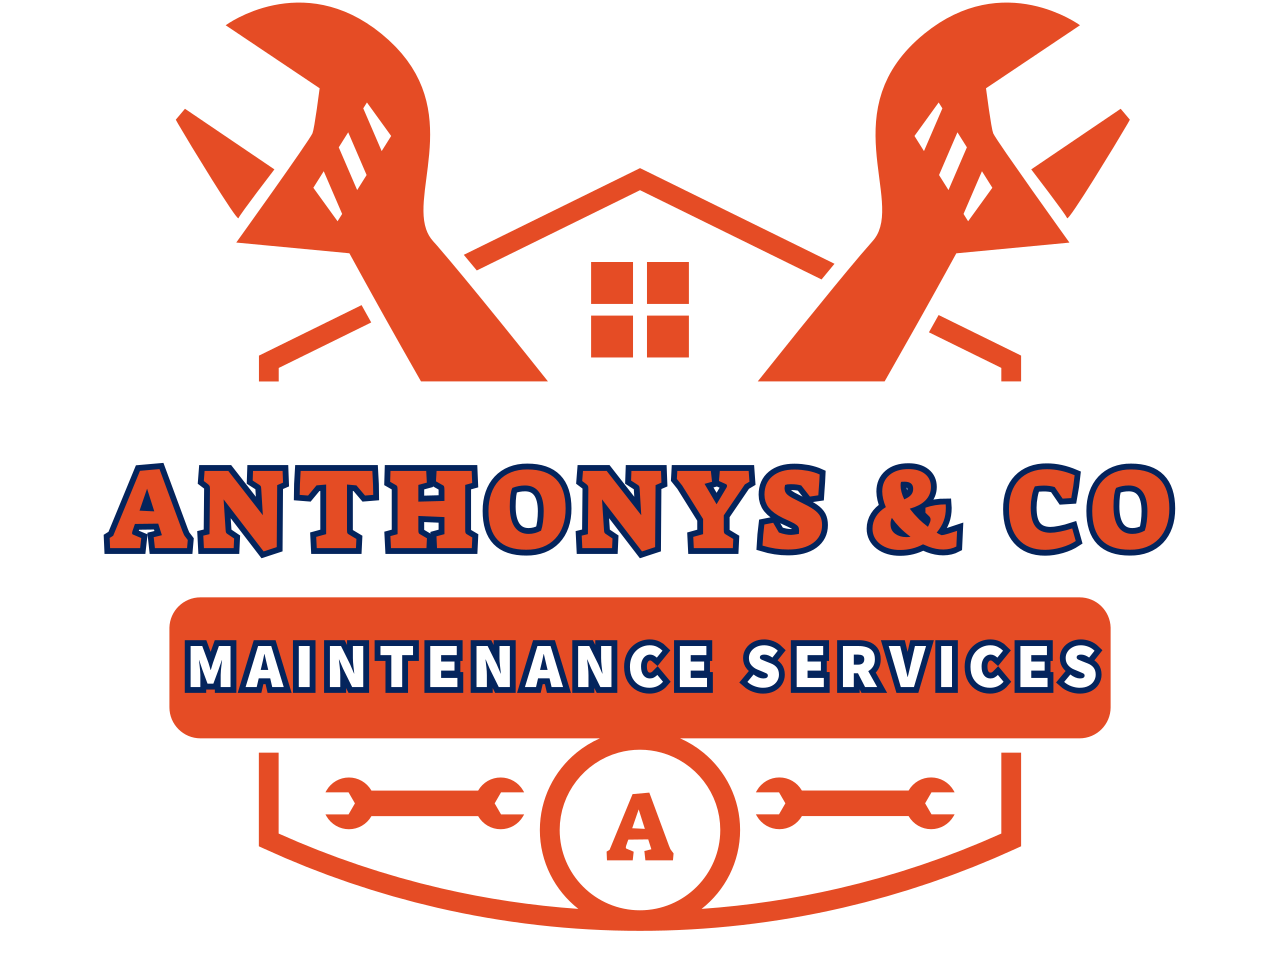 Anthonys & Co's logo